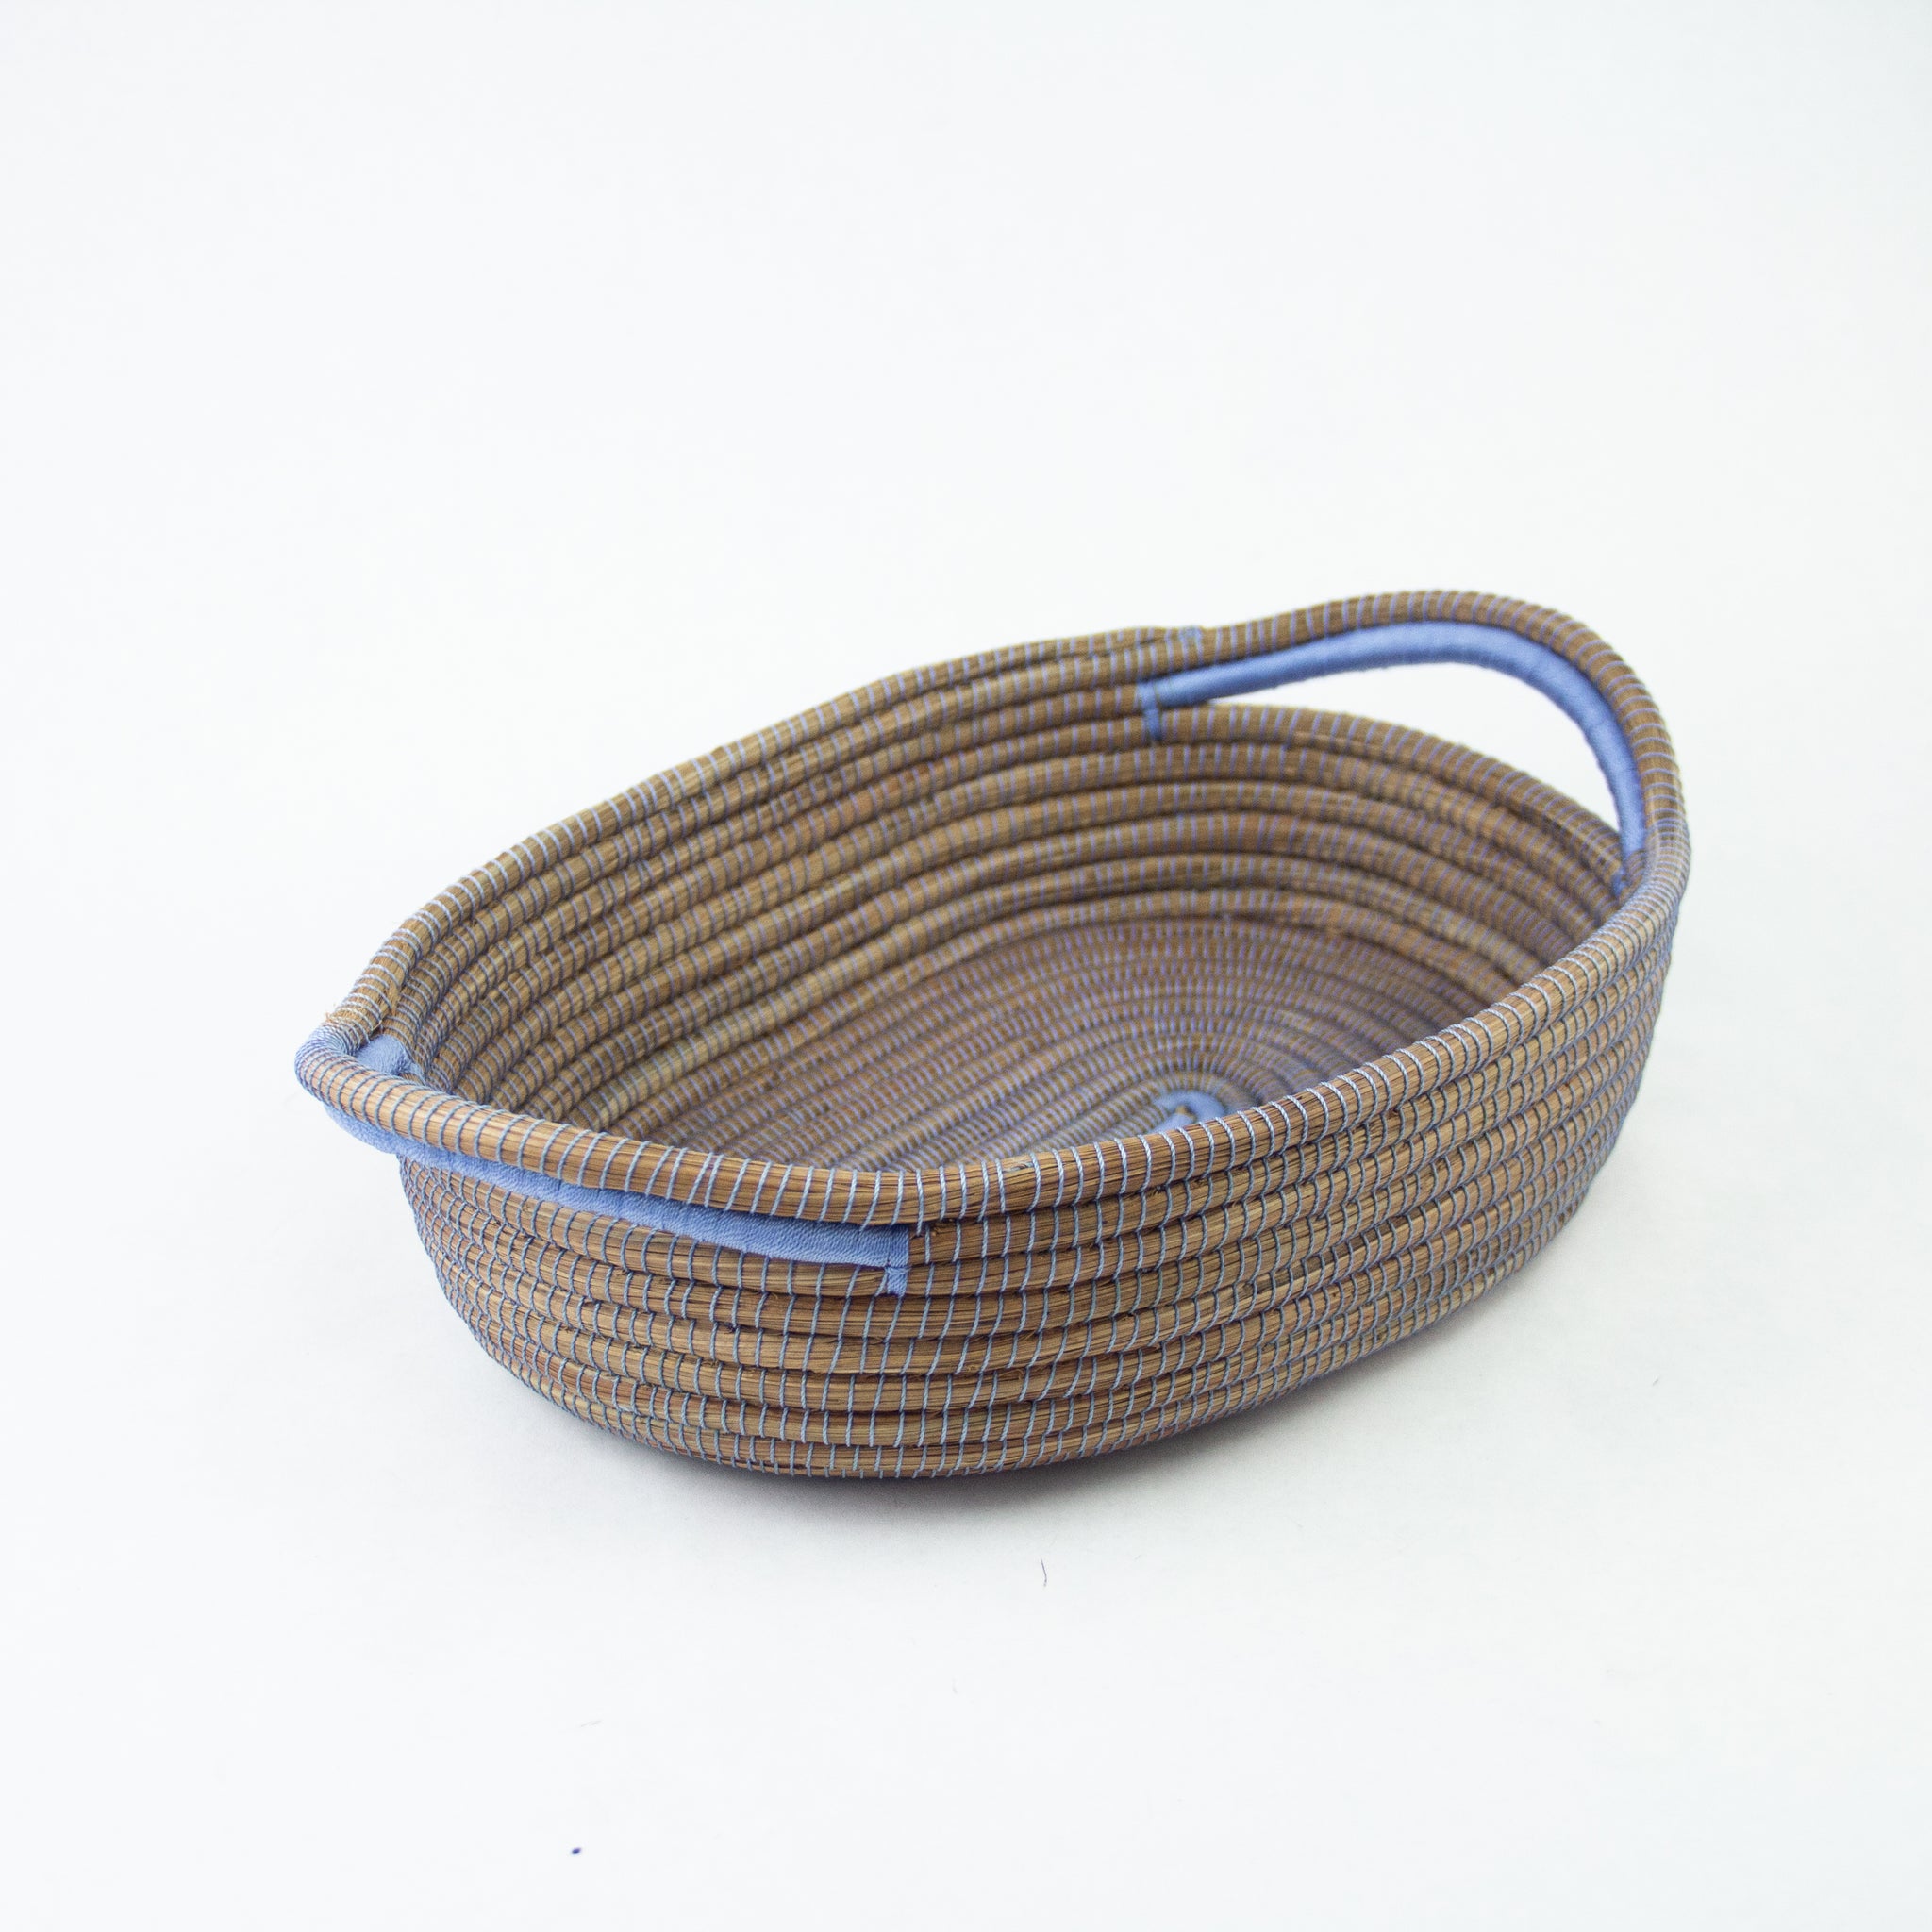 Pine Needle Basket, Sky Blue Oval